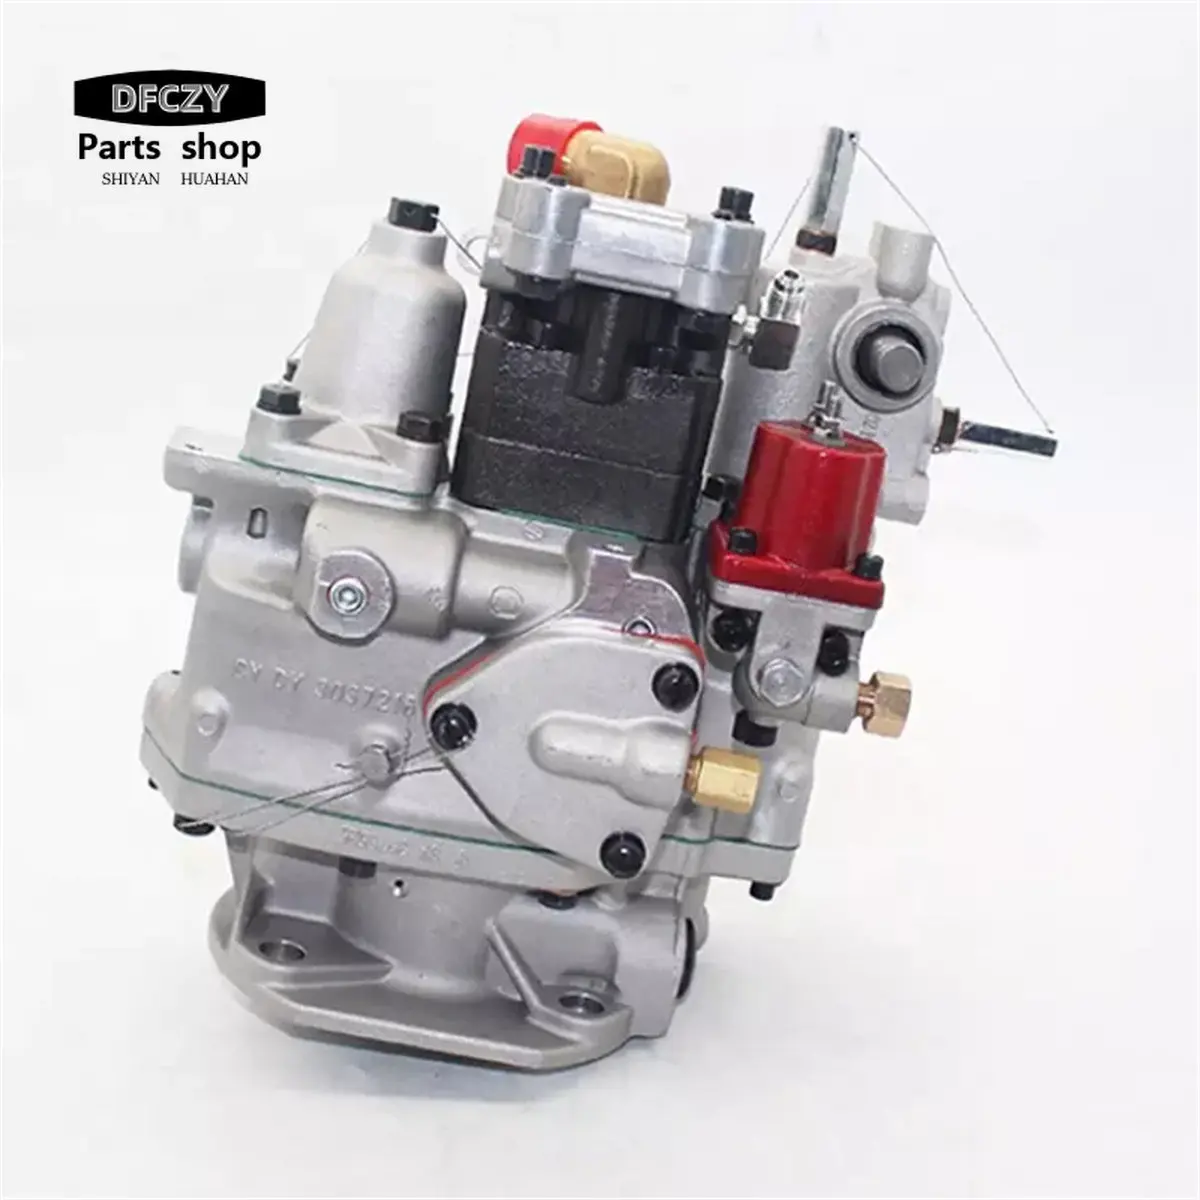 

3096205 Marine Engine Parts PT Pump KTA19 K19 Fuel Injection Pump